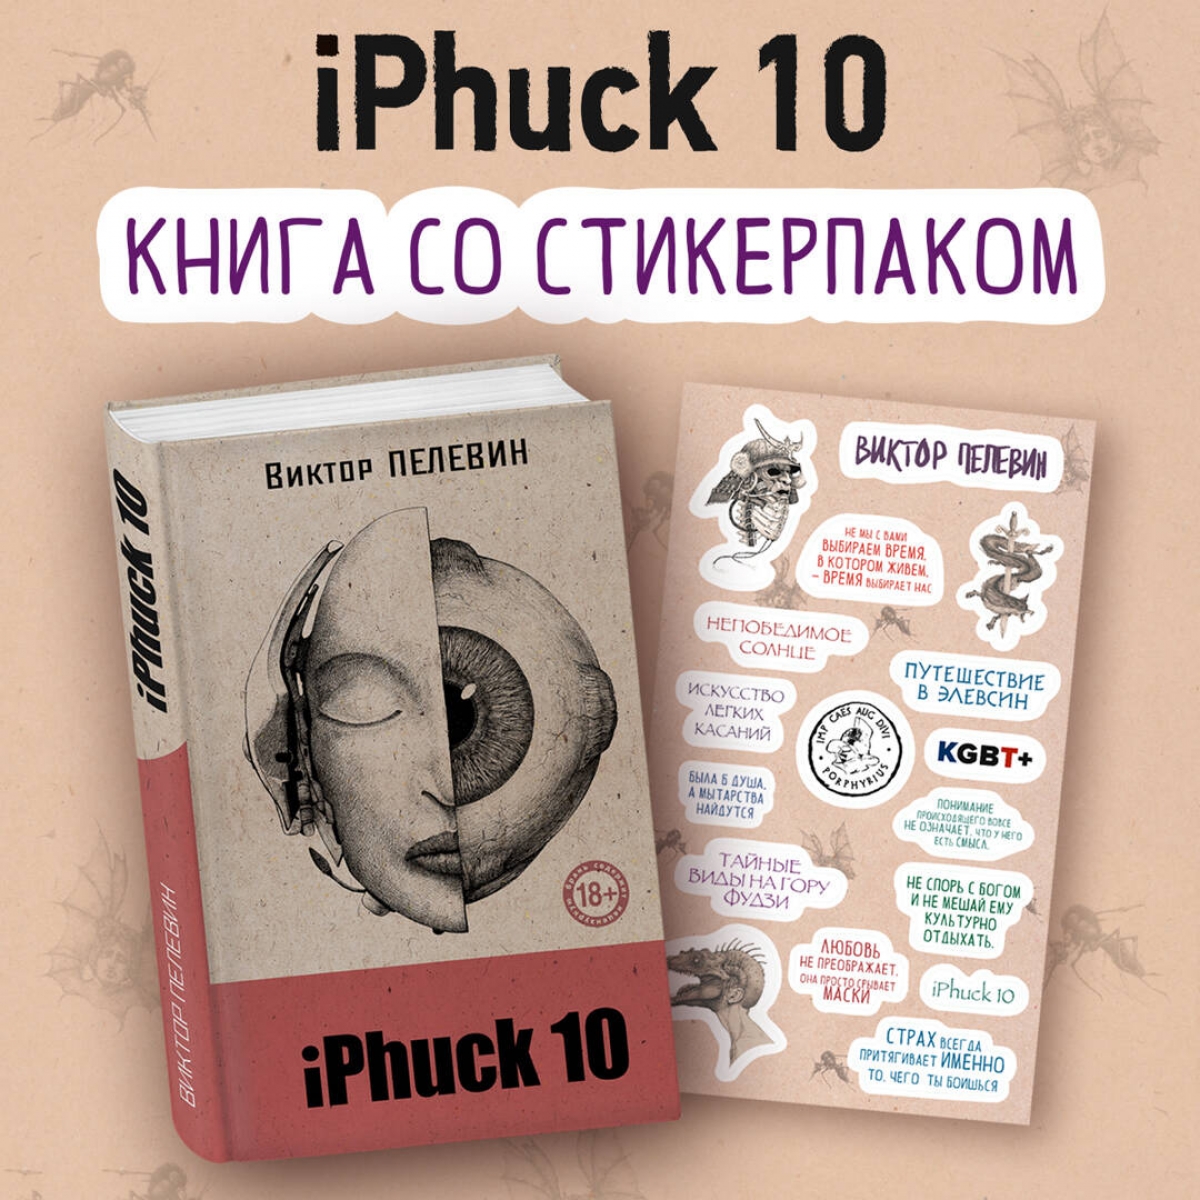  .. iPhuck 10 